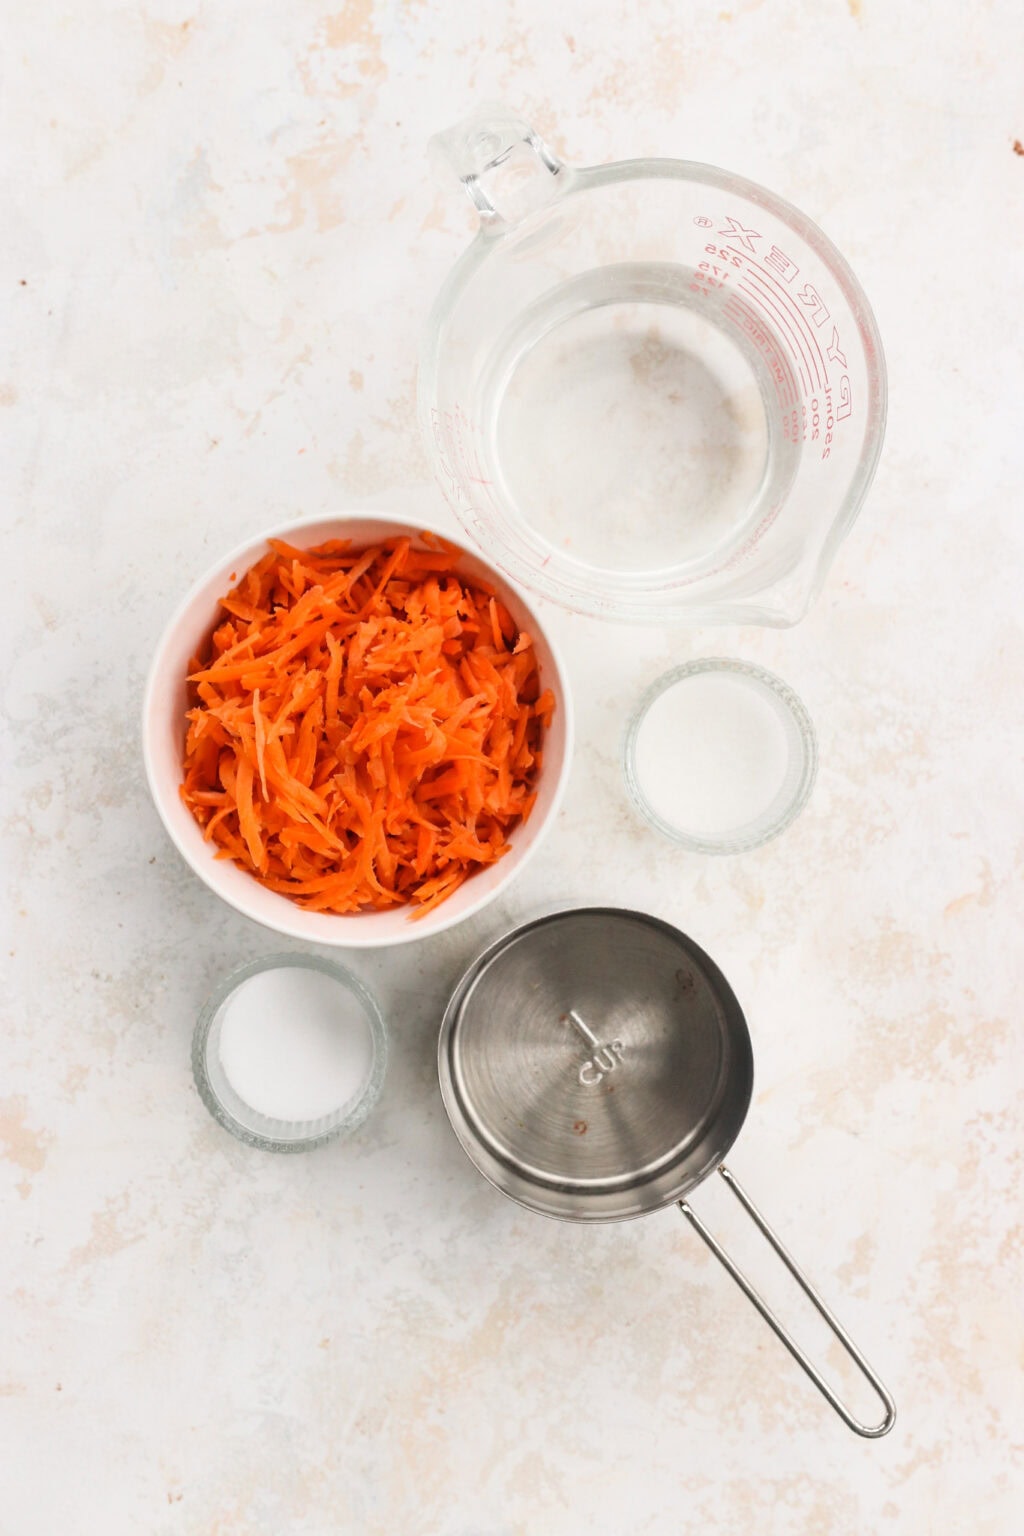 Ingredients for quick pickled shredded carrots, including shredded carrots, salt, sugar, vinegar, and hot water